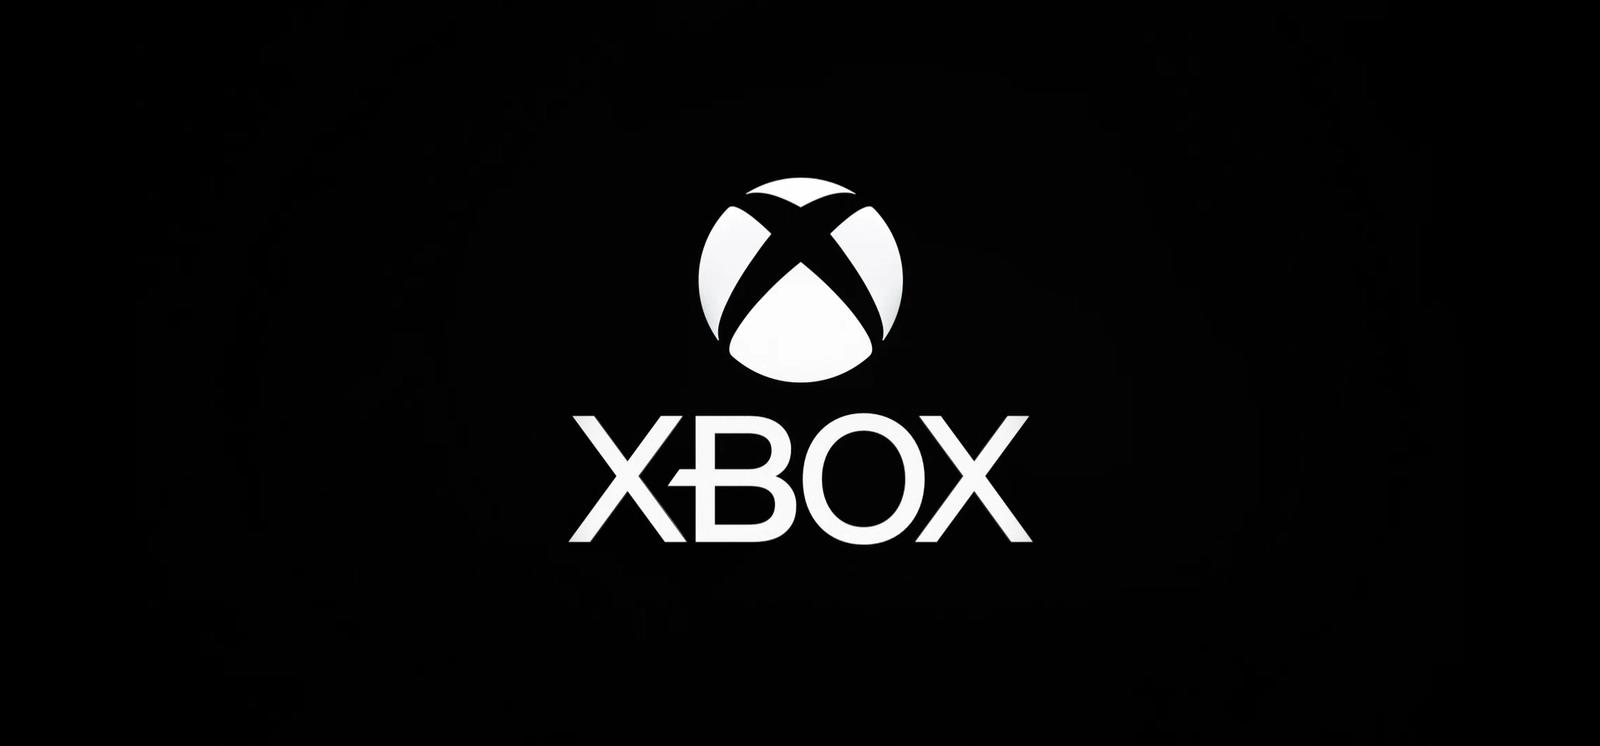 A screenshot of the Xbox Logo when loading up Fortnite